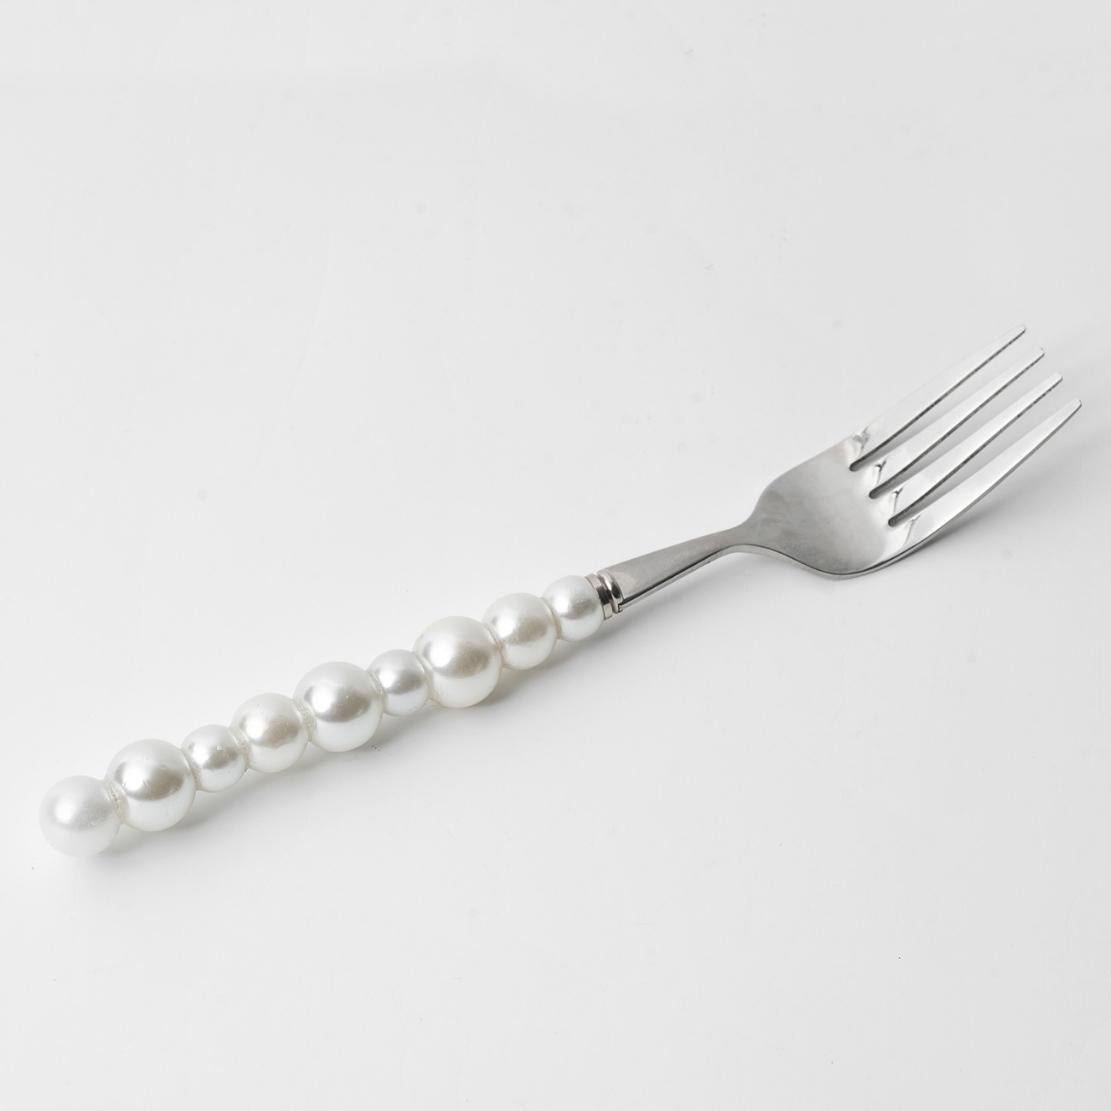 White pearl silver tableware fork